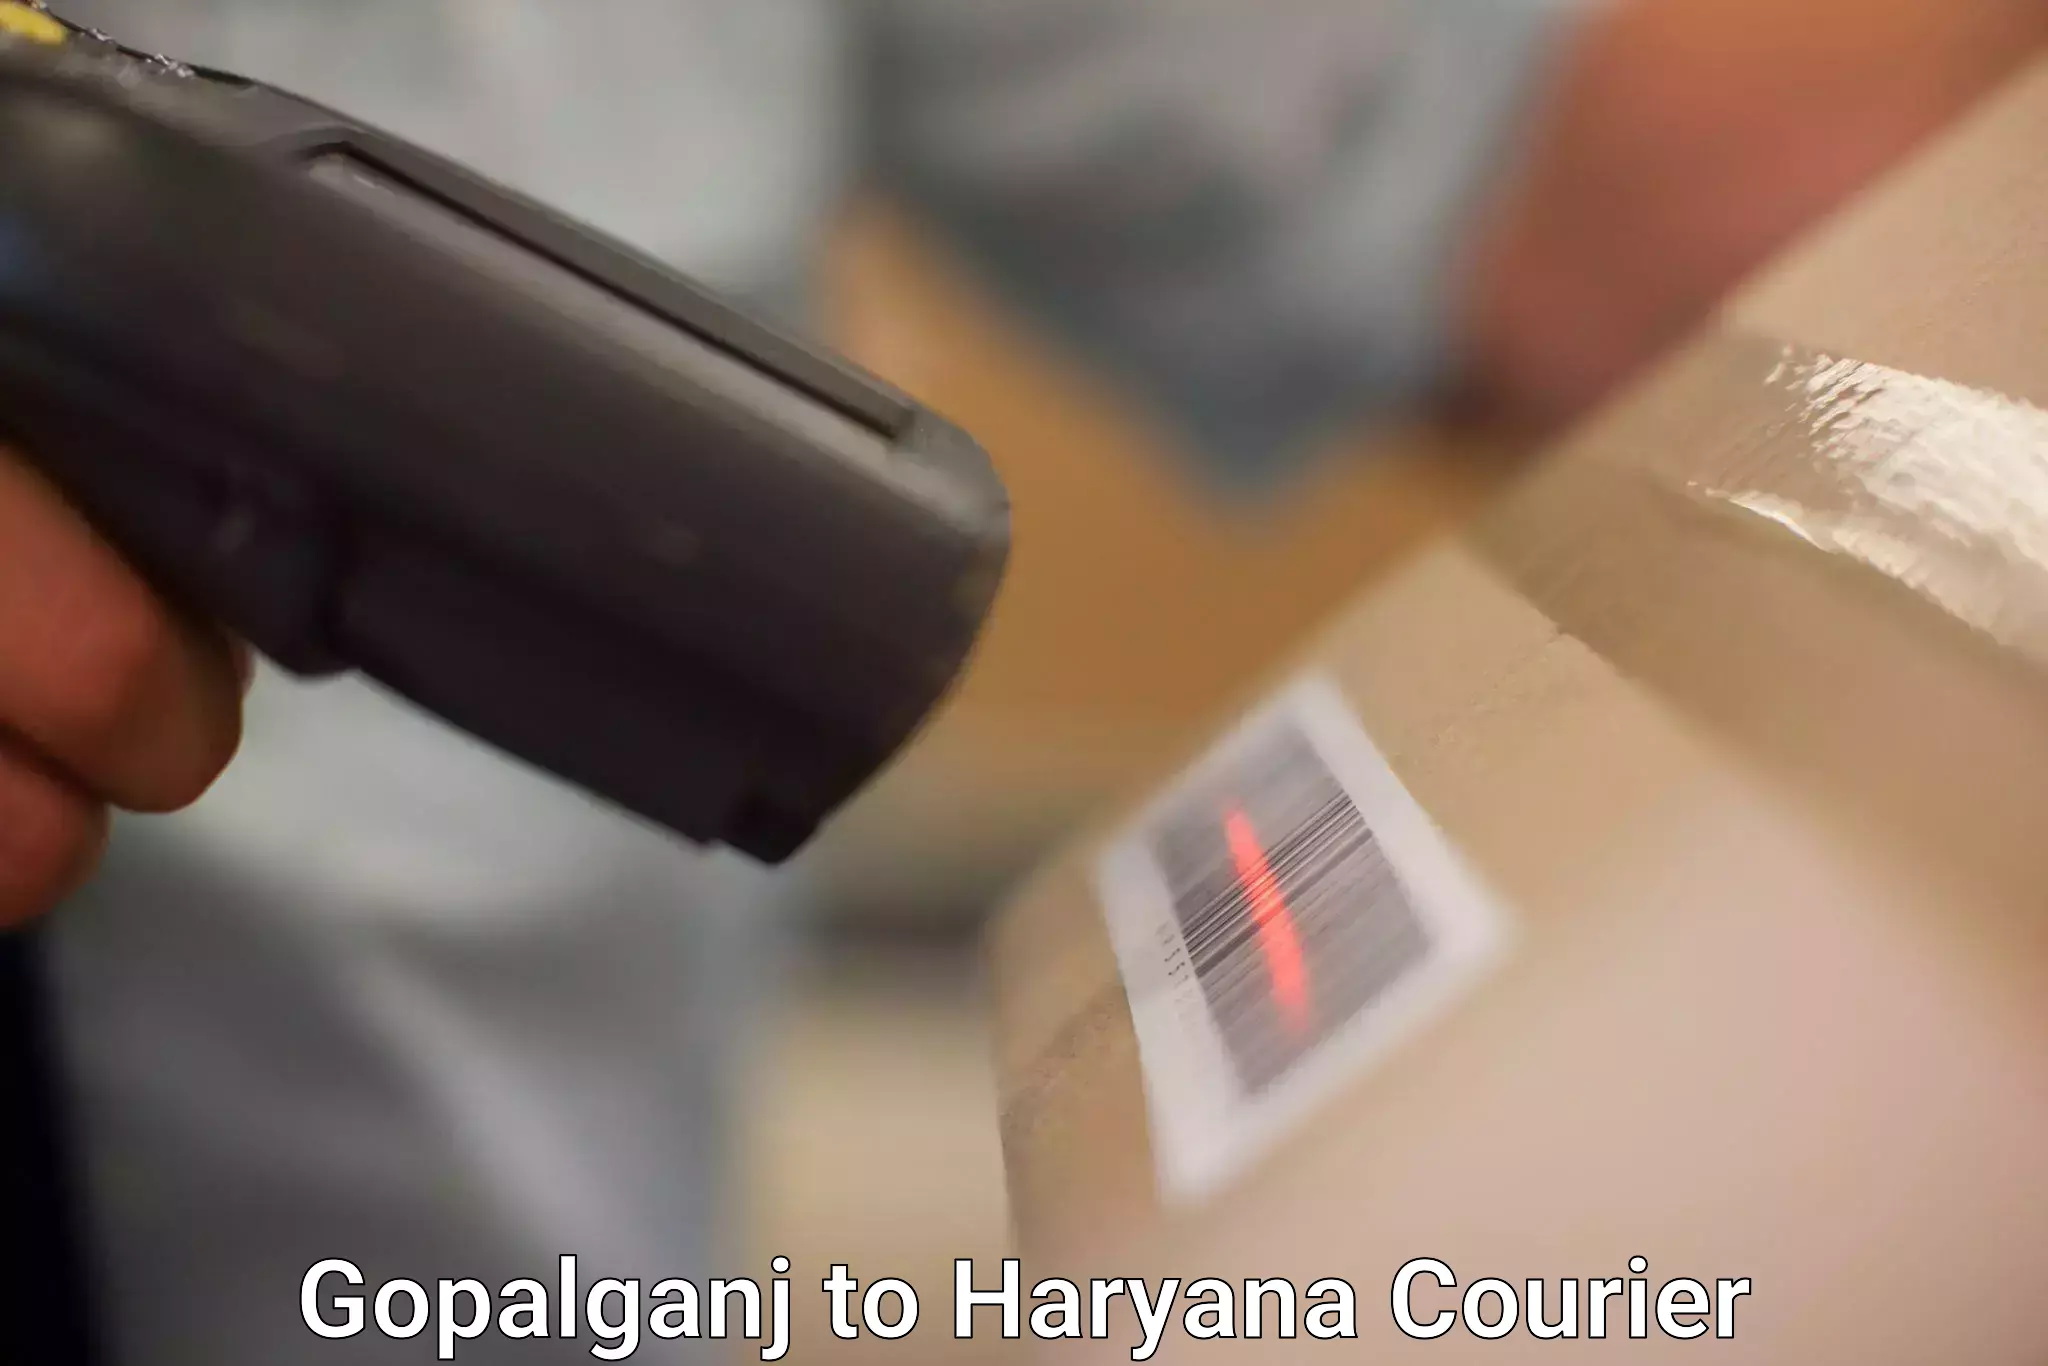 Package delivery network Gopalganj to NCR Haryana